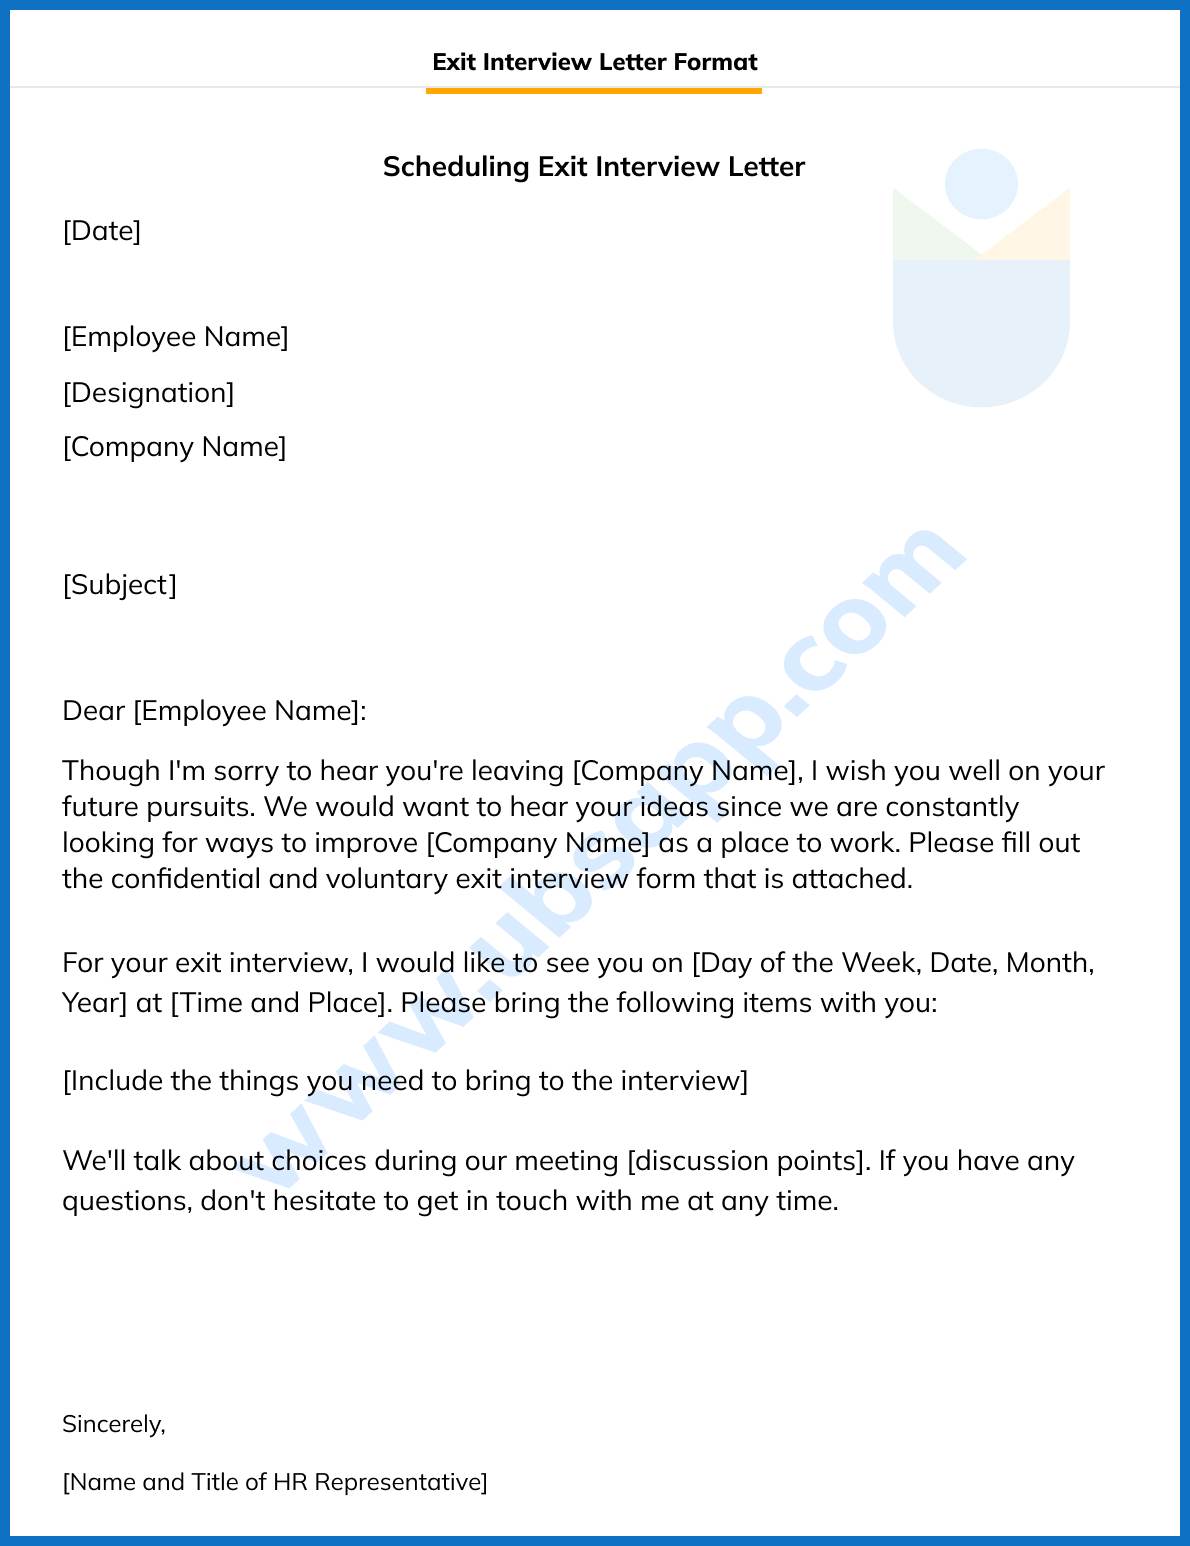 Exit Interview Letter Format